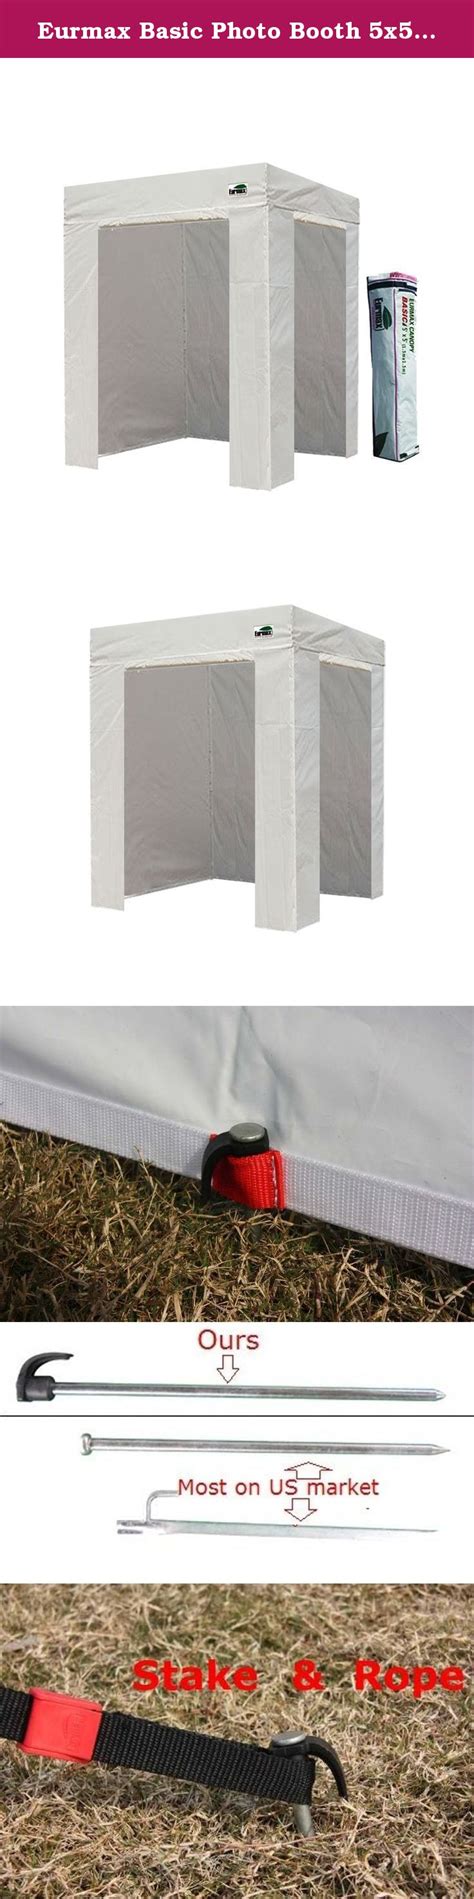 eurmax basic photo booth  pop  canopy folding tent instant outdoor gazebo  zipper